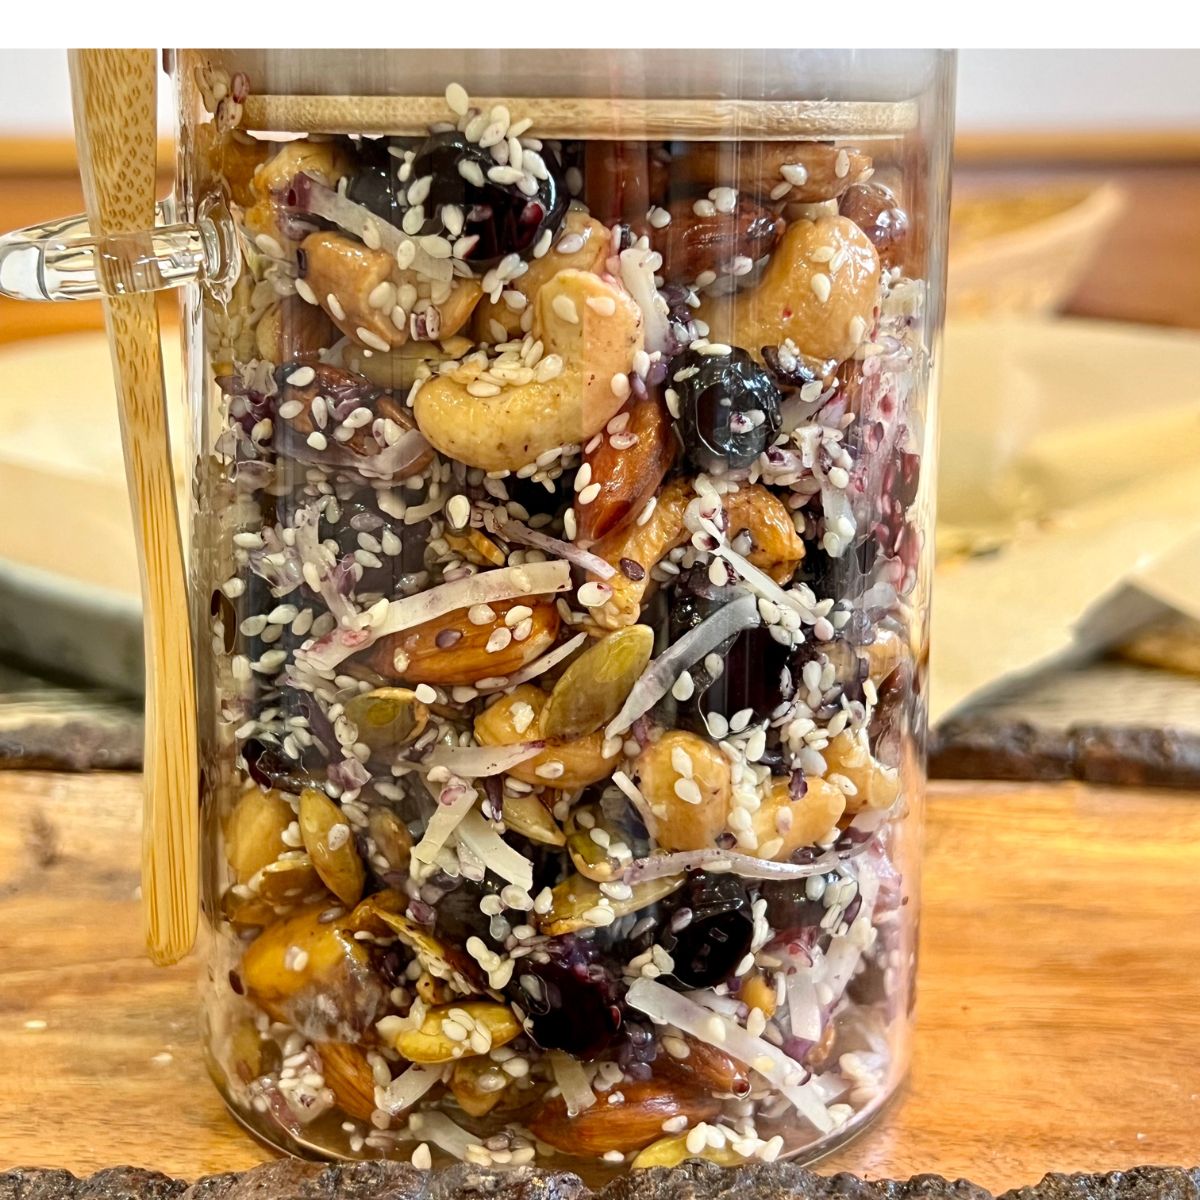 Low carb keto granola in a glass jar